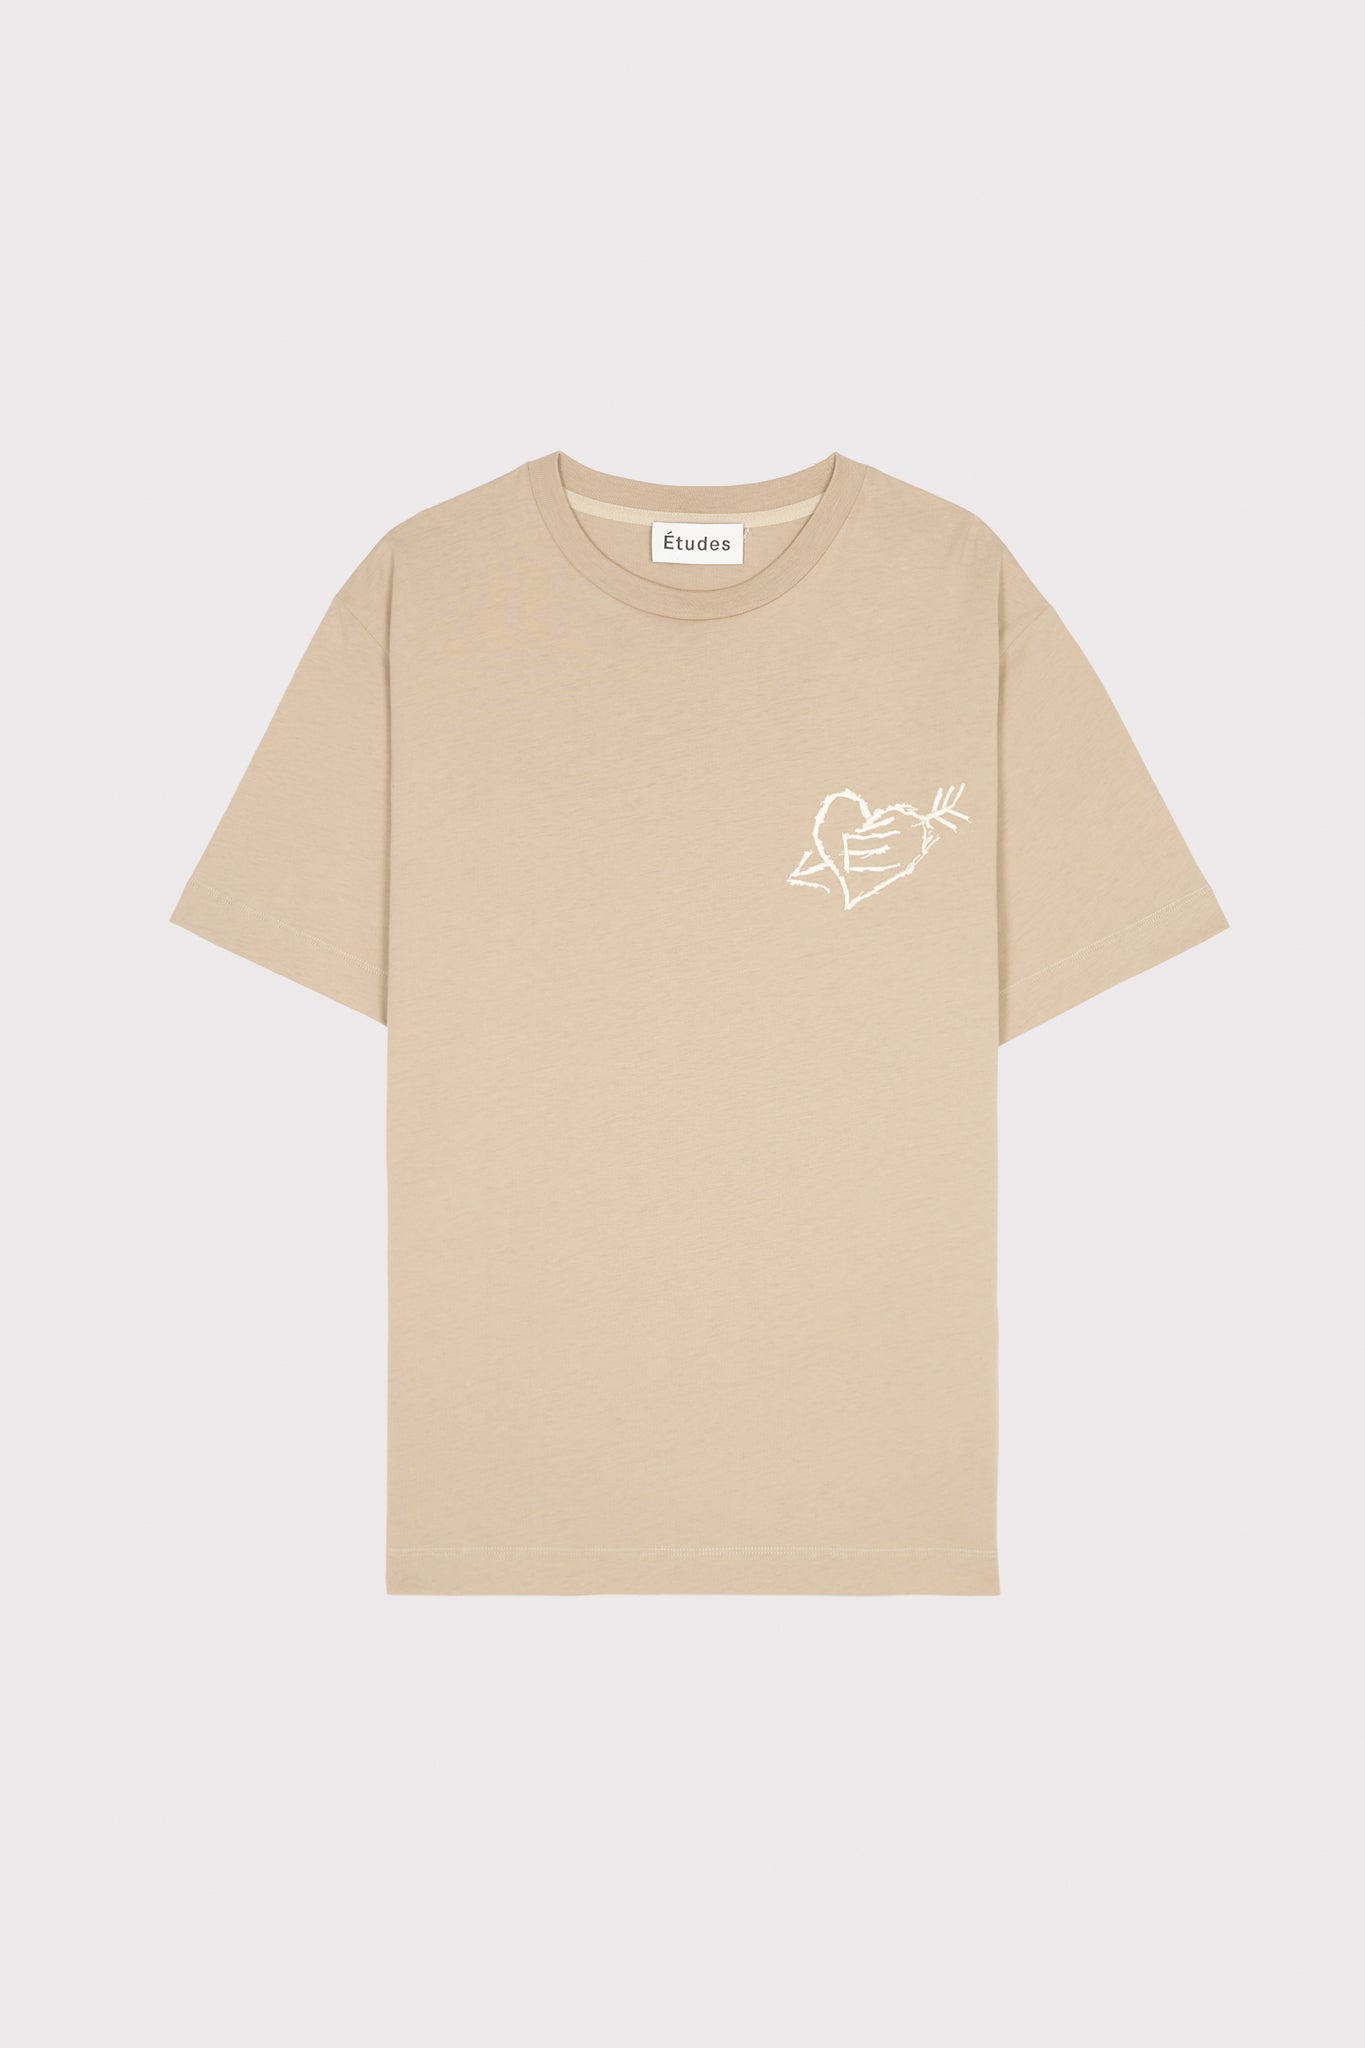 Etudes ファイヤープリントtシャツTシャツ/カットソー(七分/長袖) - Tシャツ/カットソー(七分/長袖)